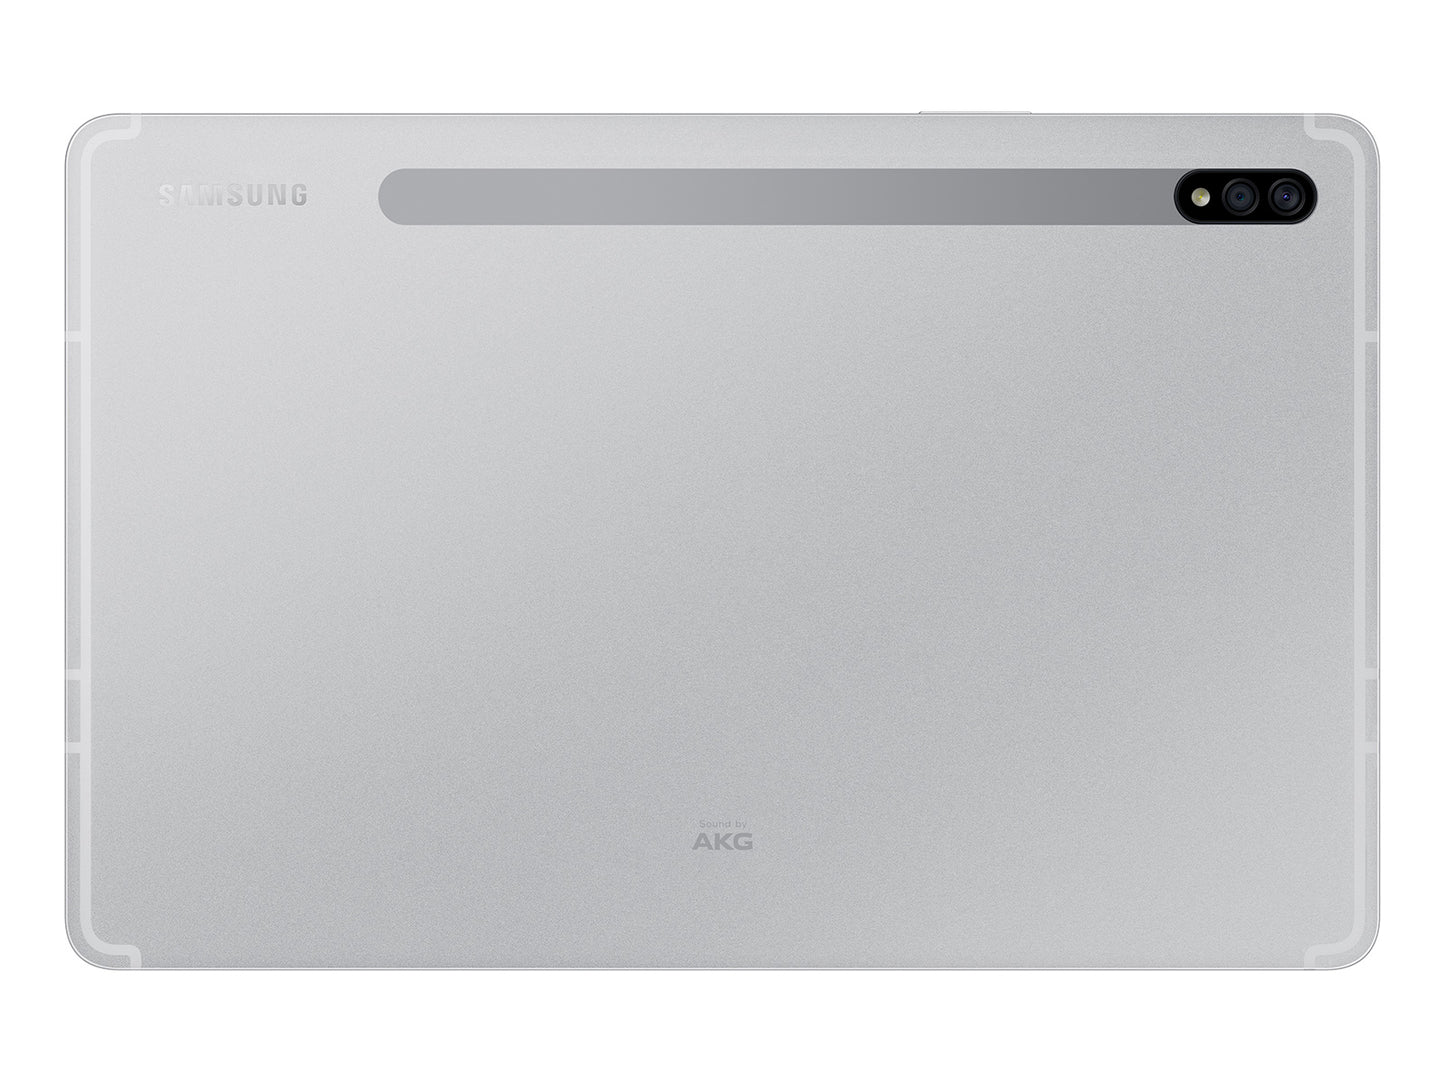 (Open Box) Samsung Galaxy Tab S7 11-in 128GB Tablet - Mystic Silver SM-T870NZSAXAR (2020)